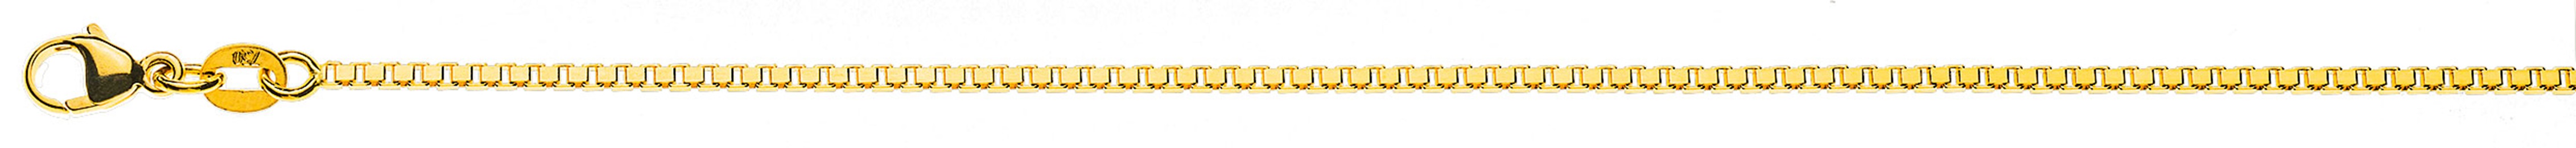 AURONOS Prestige Necklace yellow gold 18K Venetian chain diamond 50cm 1.4mm